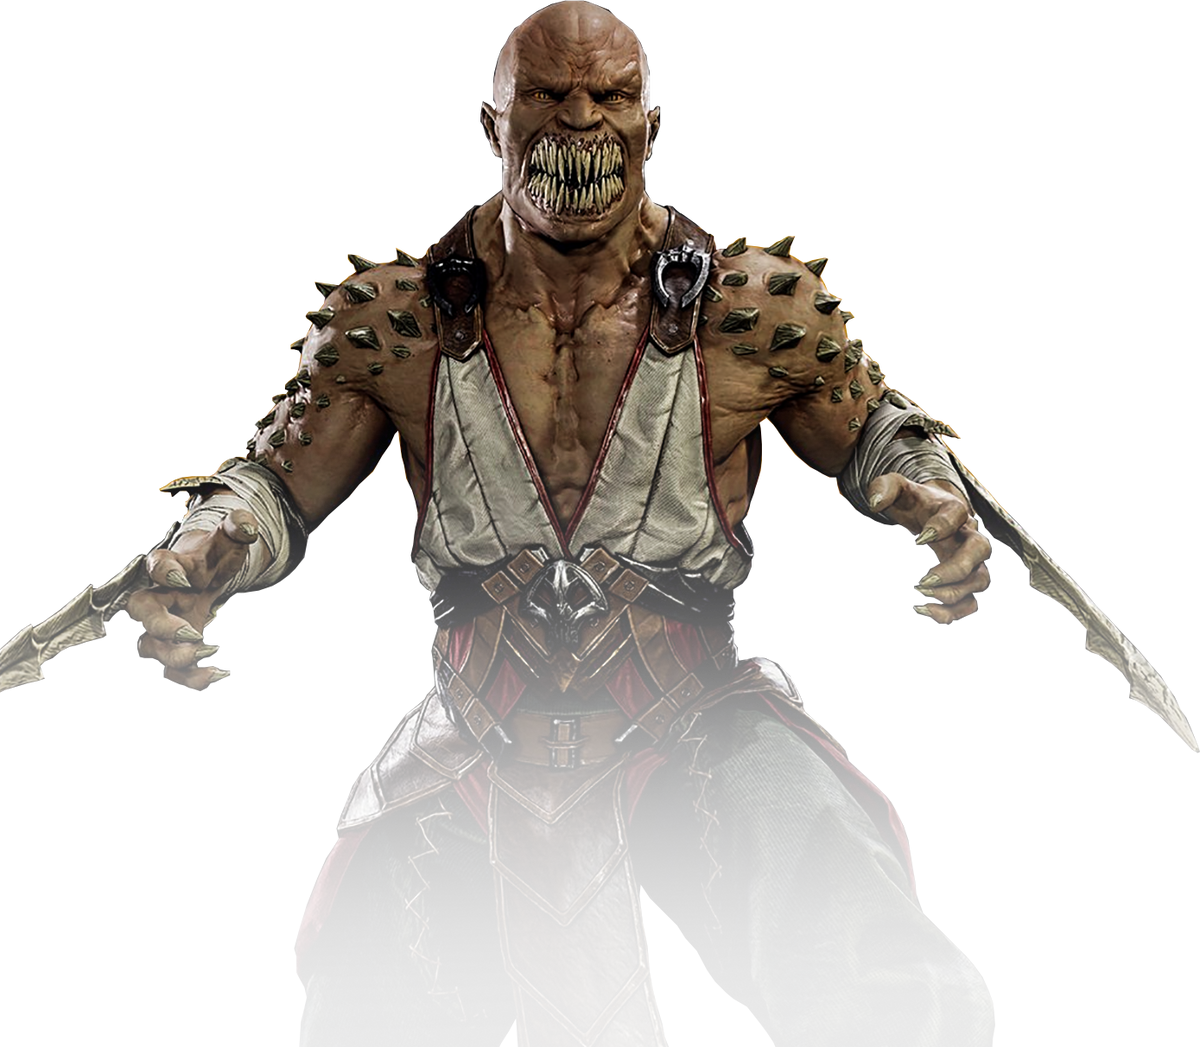 Baraka's Death in Mortal Kombat 9 vs Baraka's Death in Mortal Kombat X  (2006-2019) 